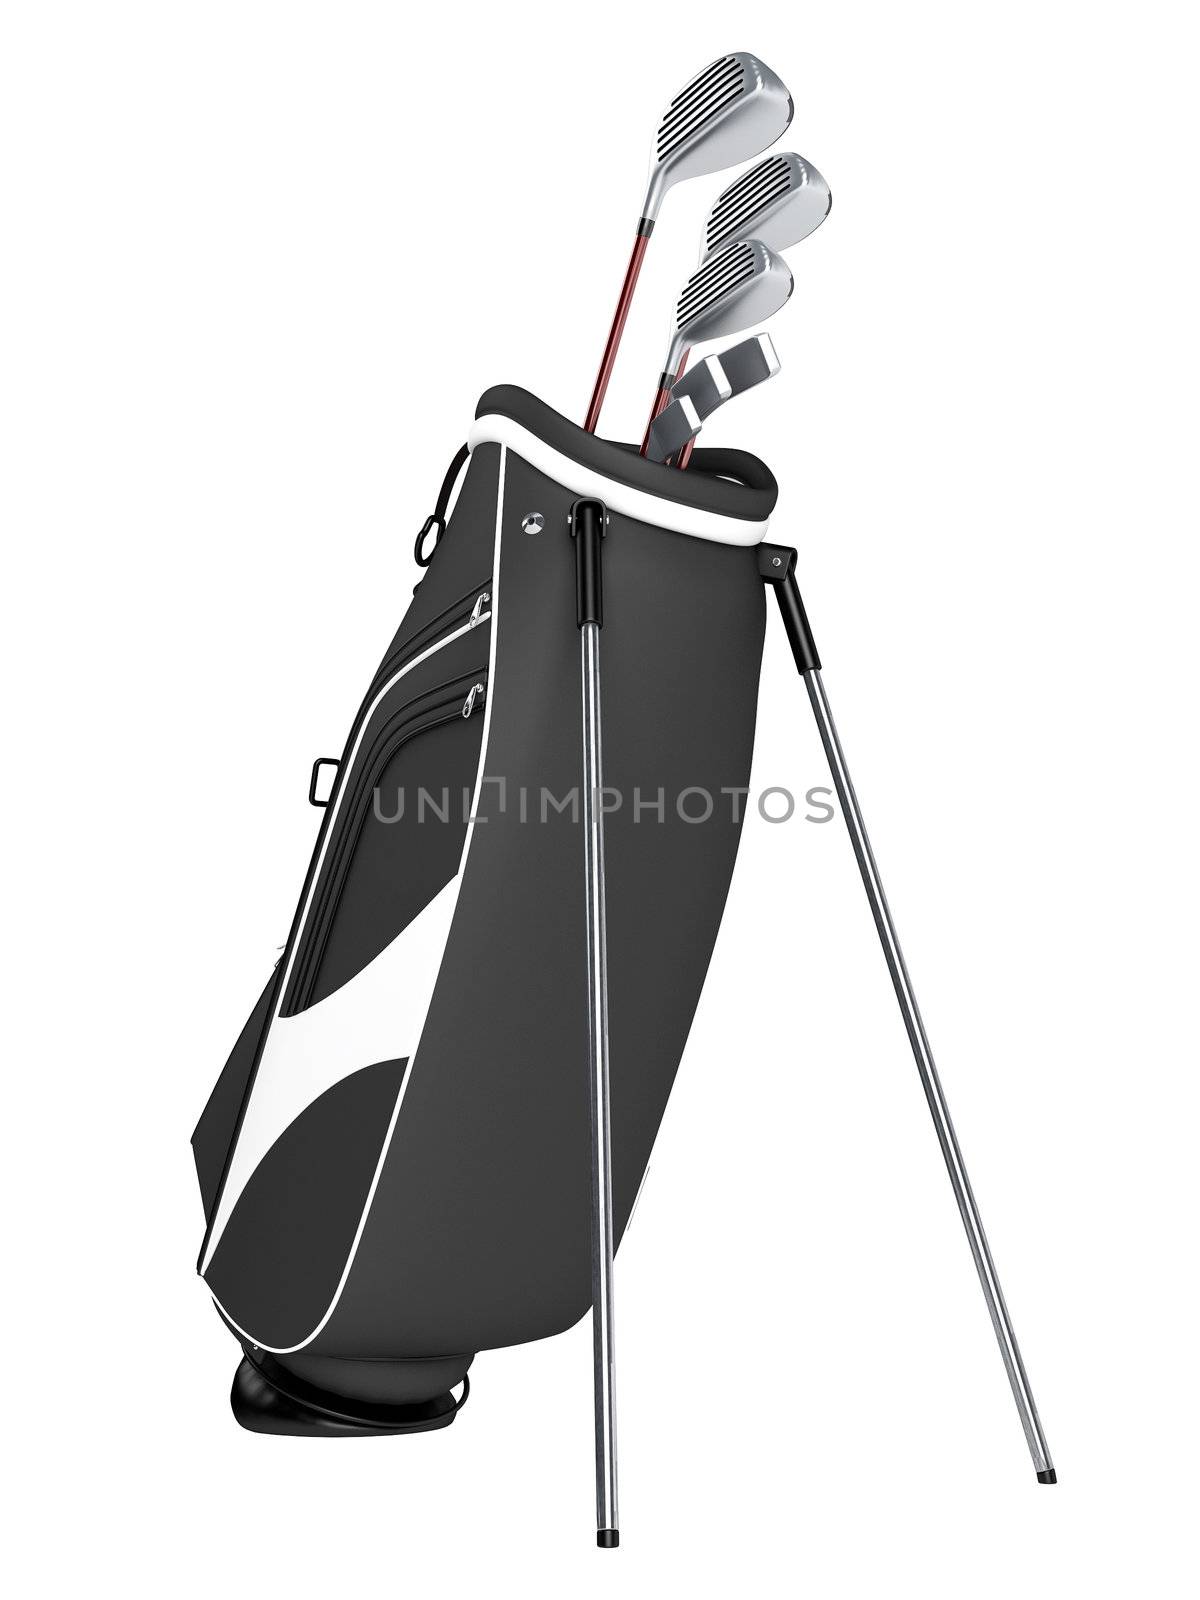 Black bag with golf clubs by AlexanderMorozov